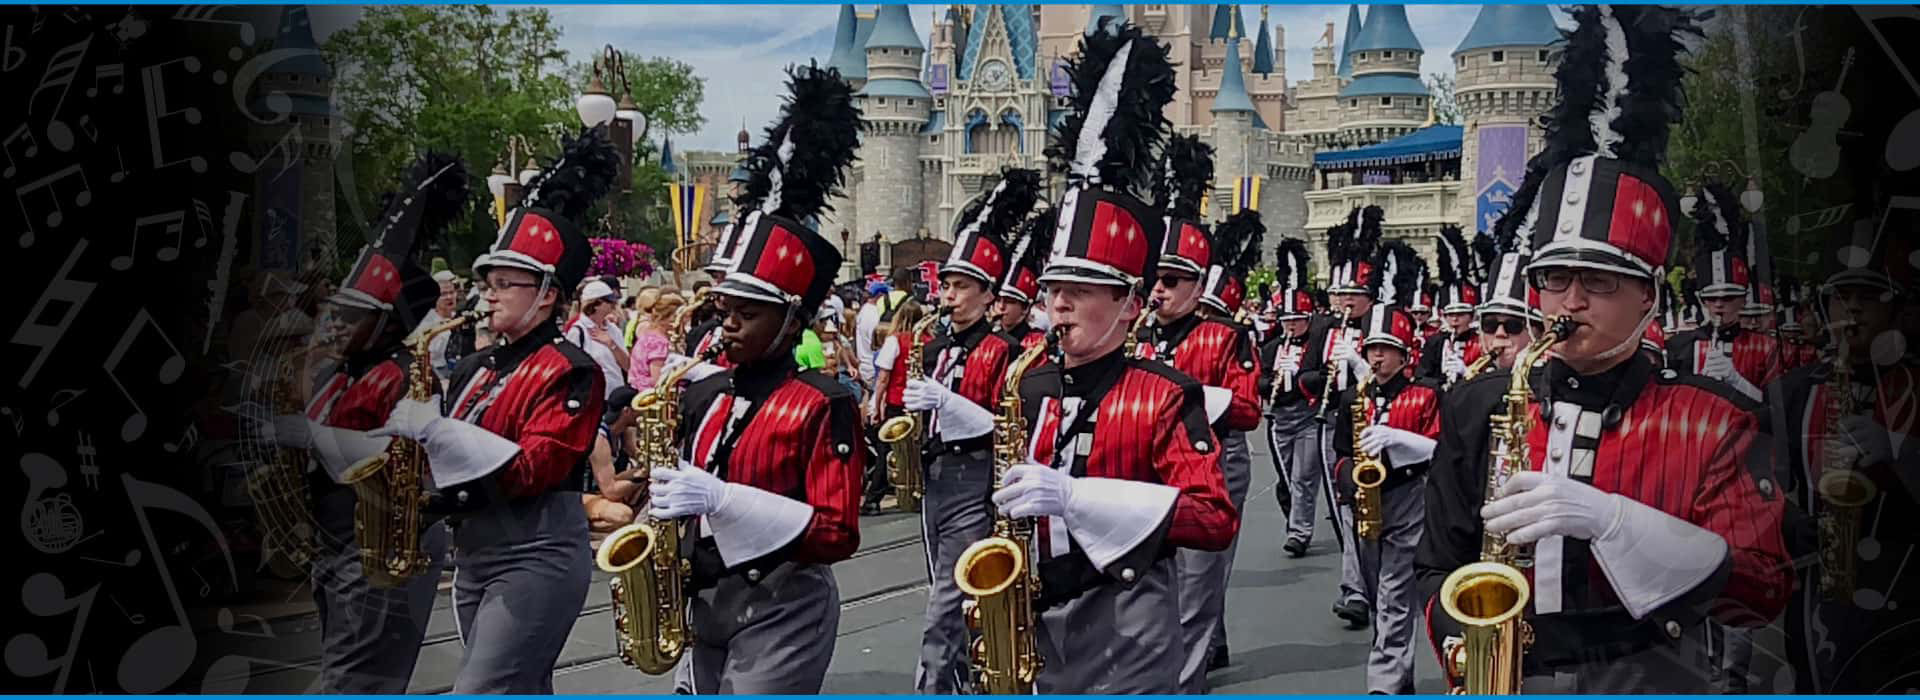 Disney Band Travel